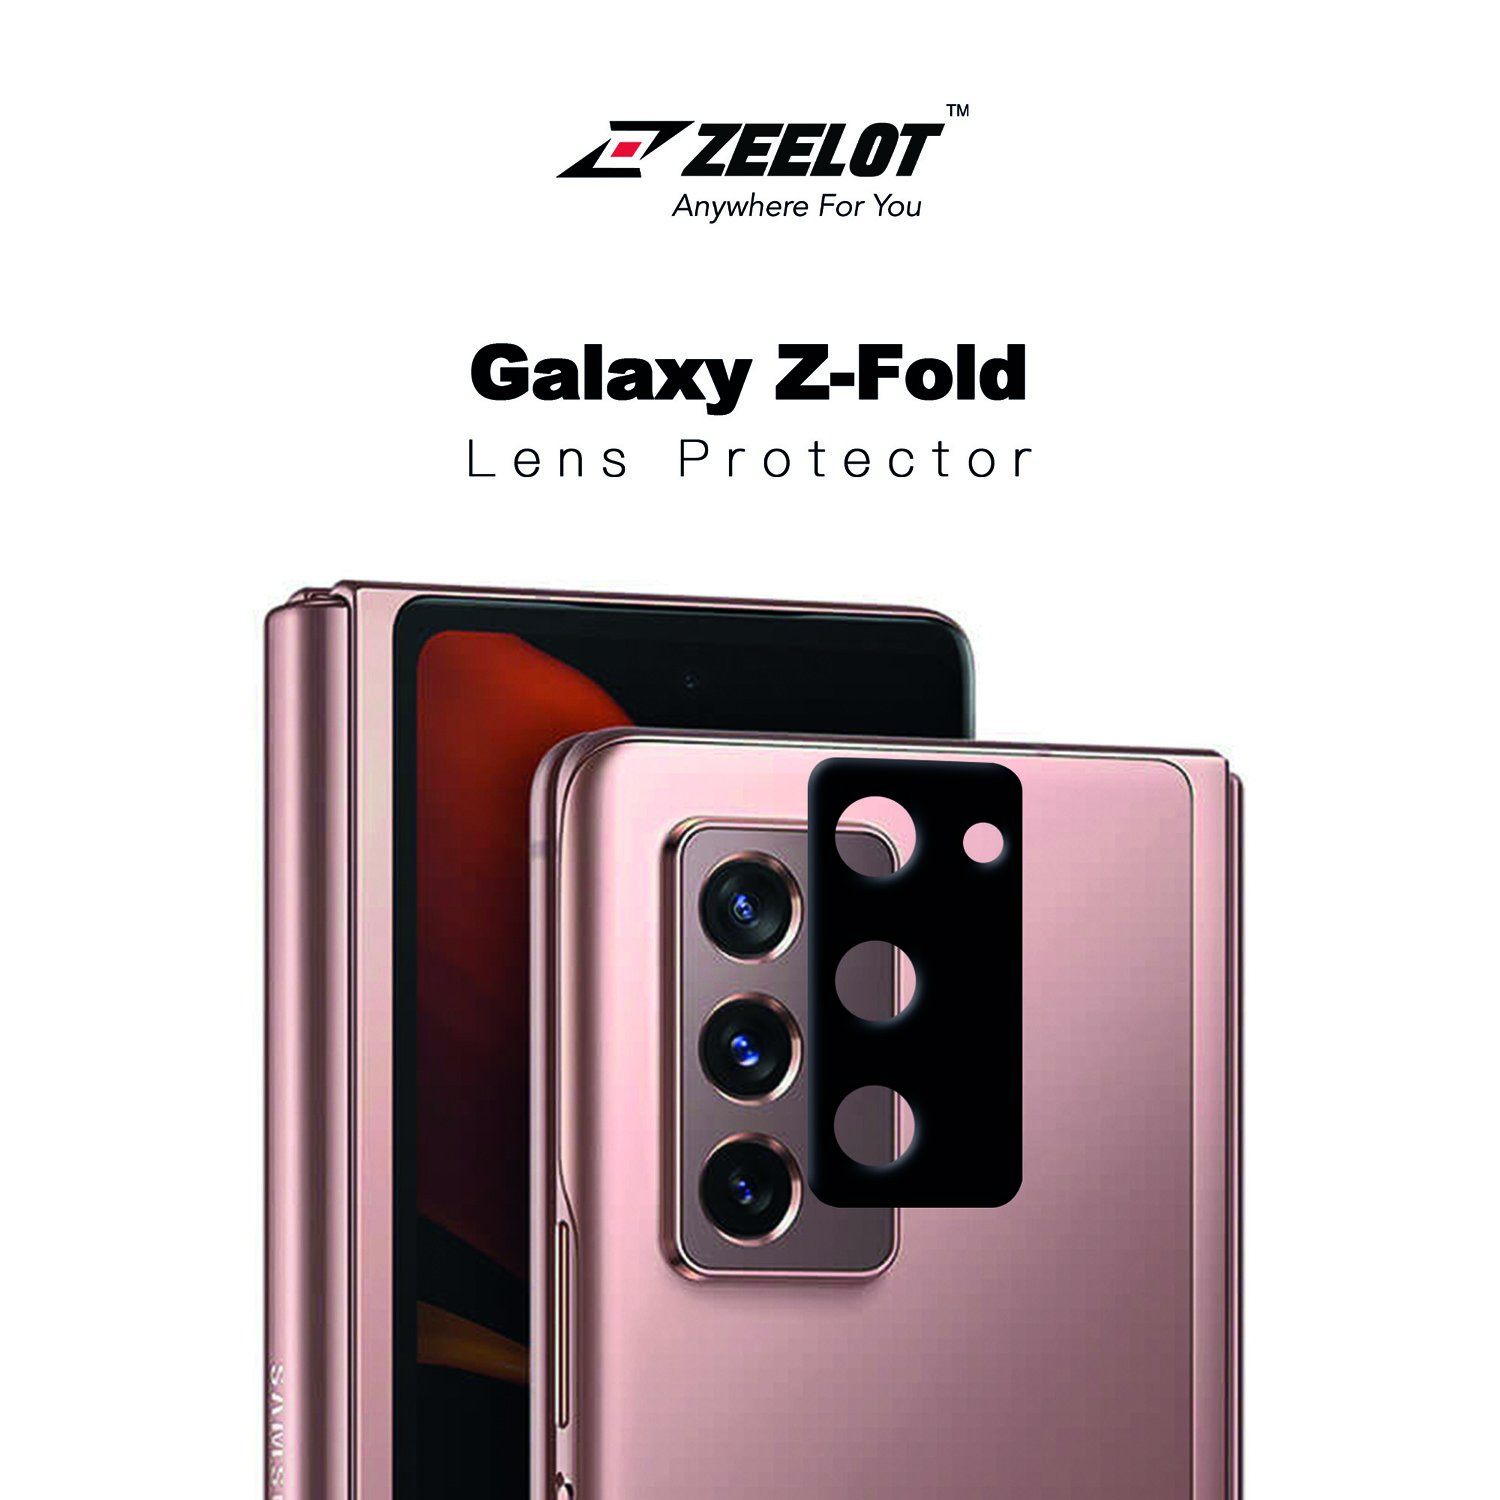 ZEELOT Lens Protector for Galaxy Z Fold 2, Black Default Zeelot 